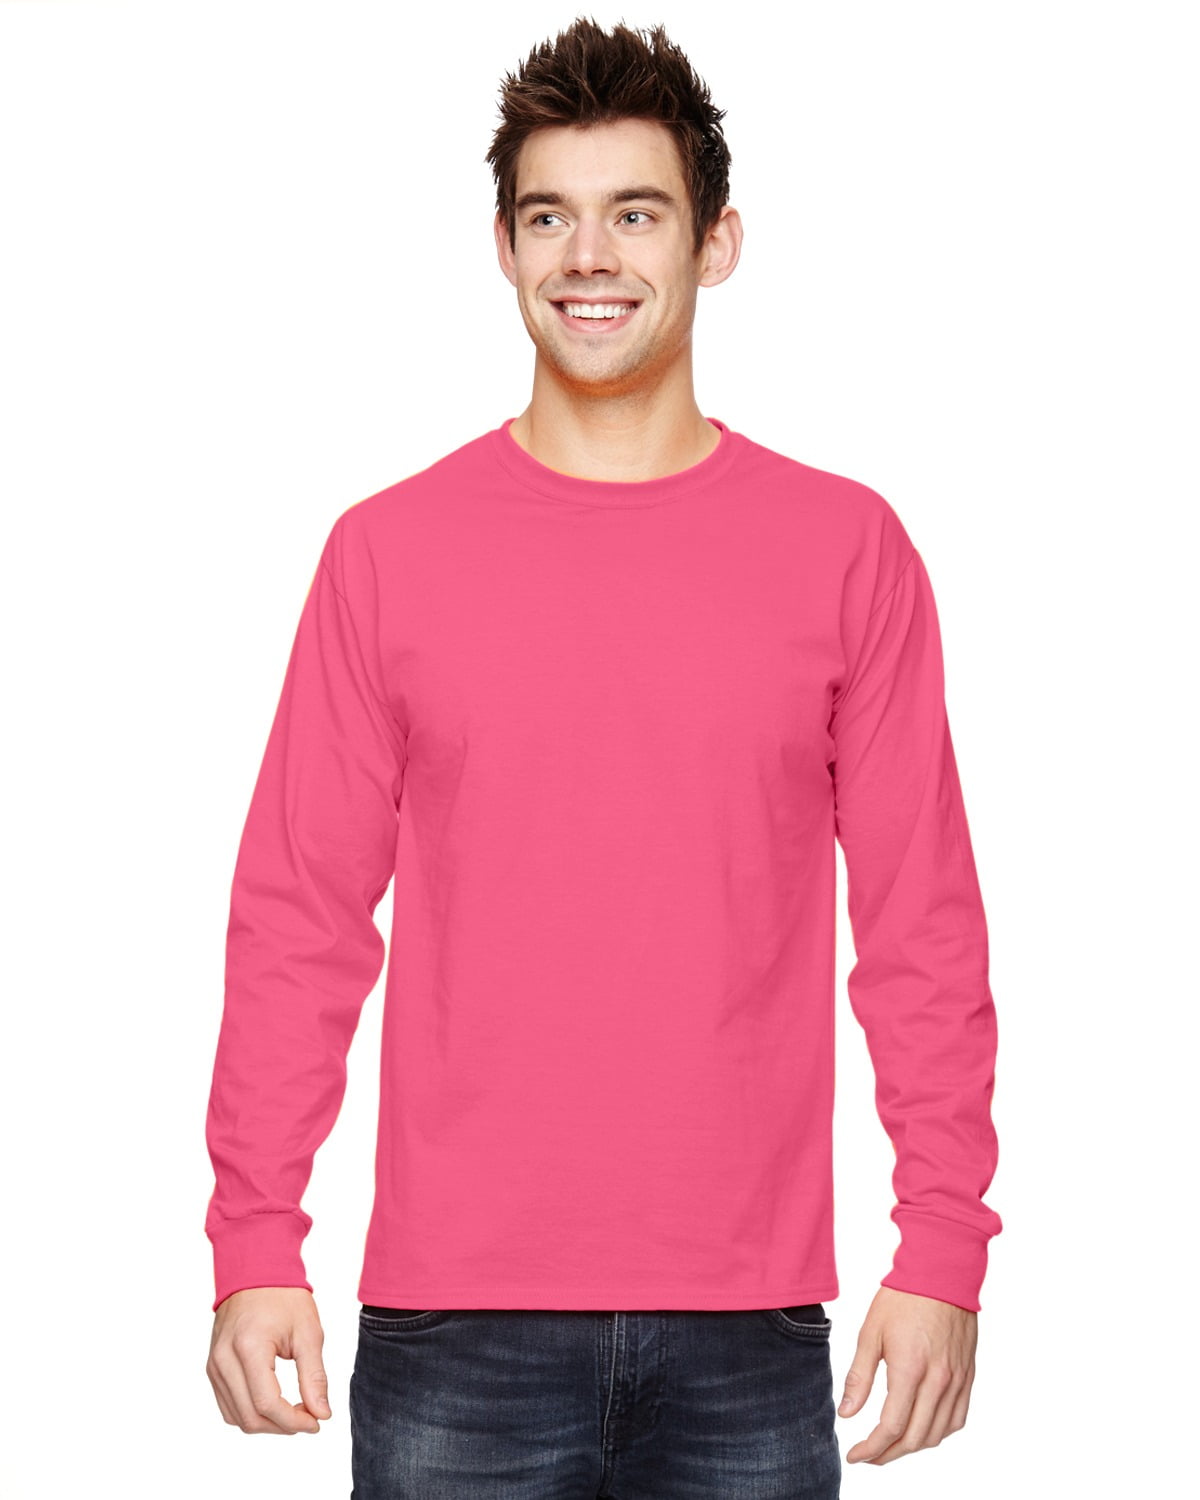 pink t shirt long sleeve